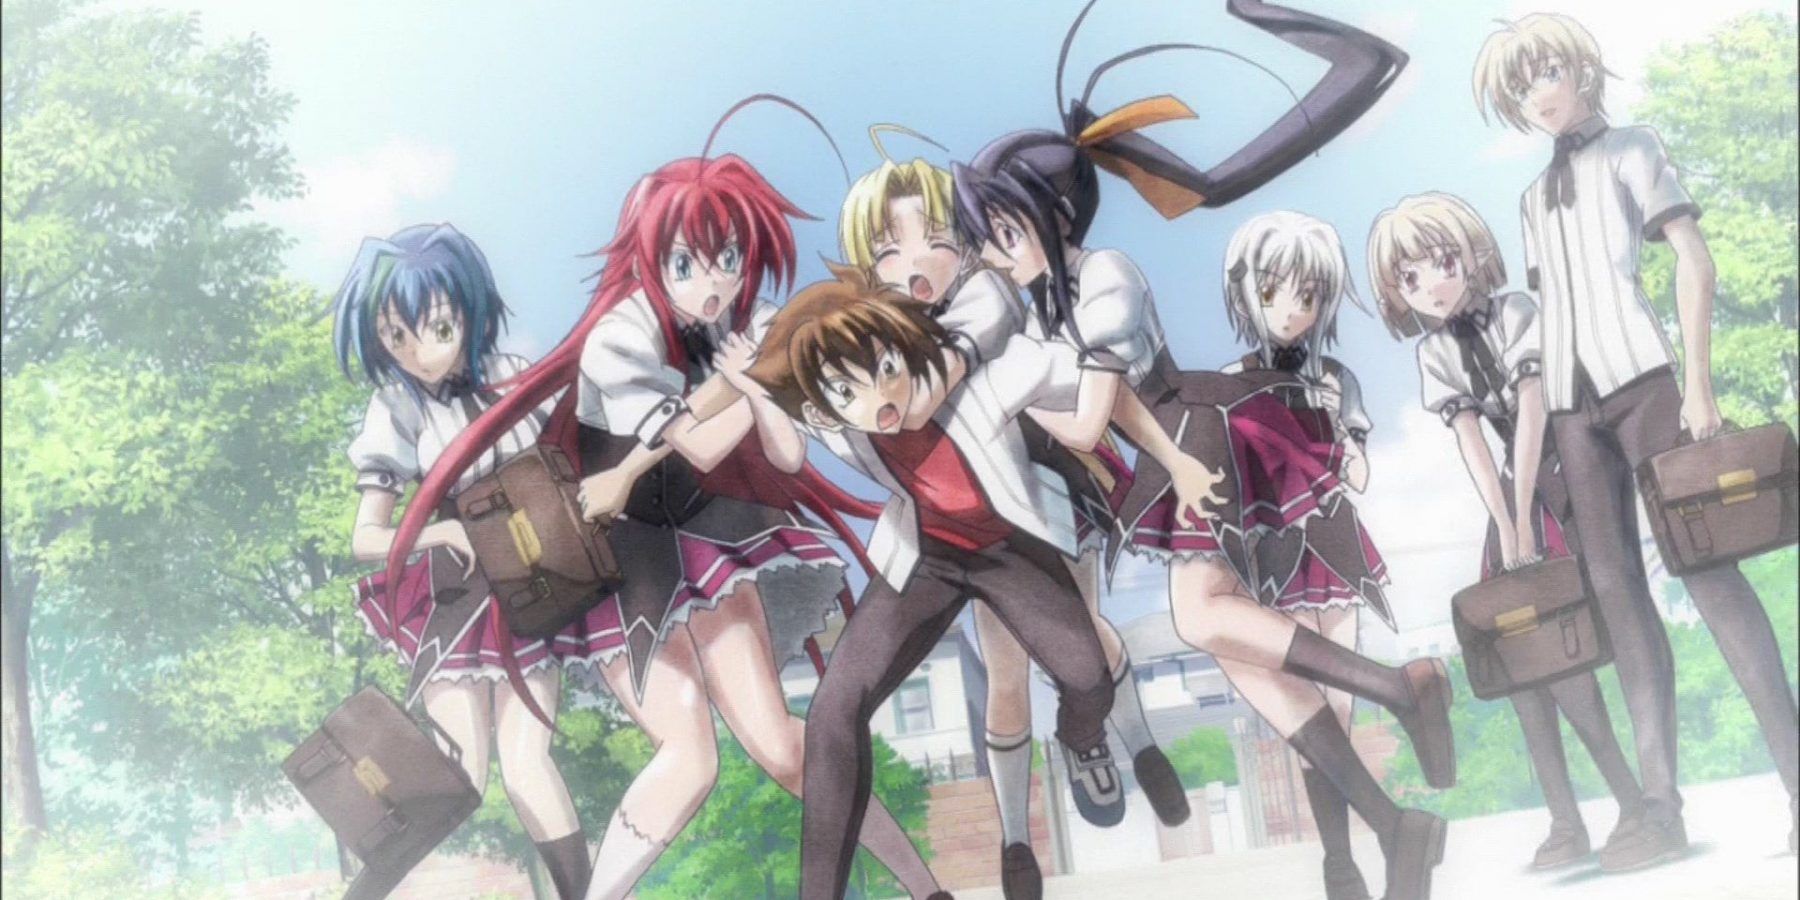 A High School DxD image shows Rias, Asia and Akeno wrap their arms around Issei